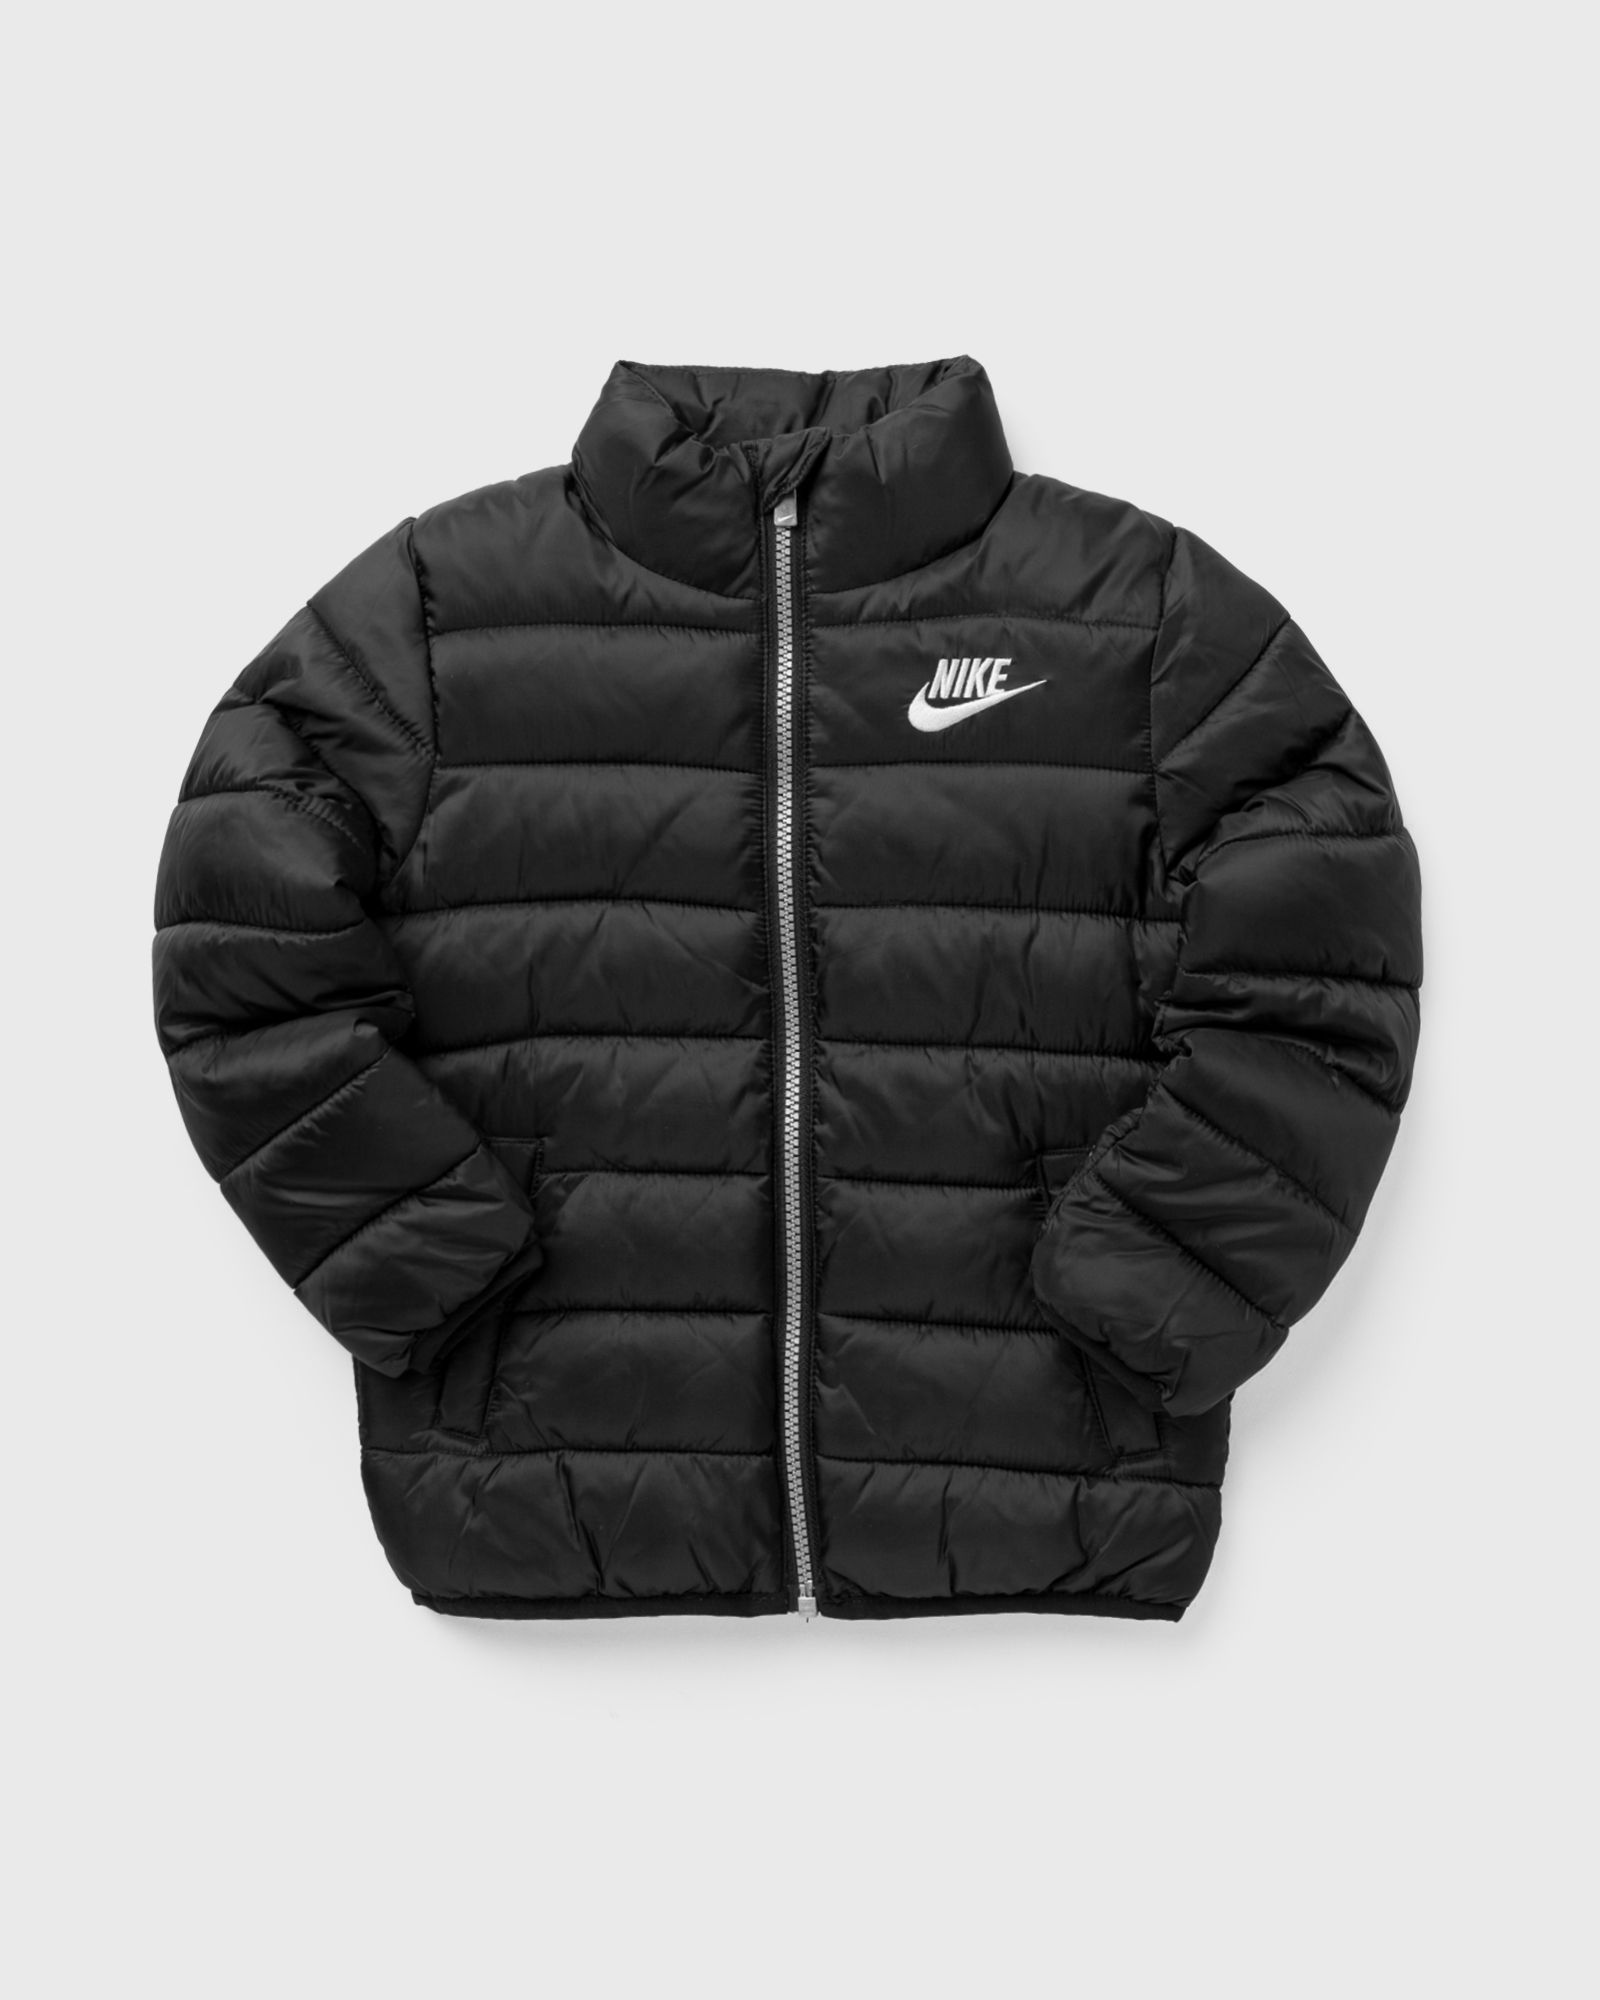 Nike - mid weight down puffer  light jackets black in größe:age 2-4 | eu 92-104